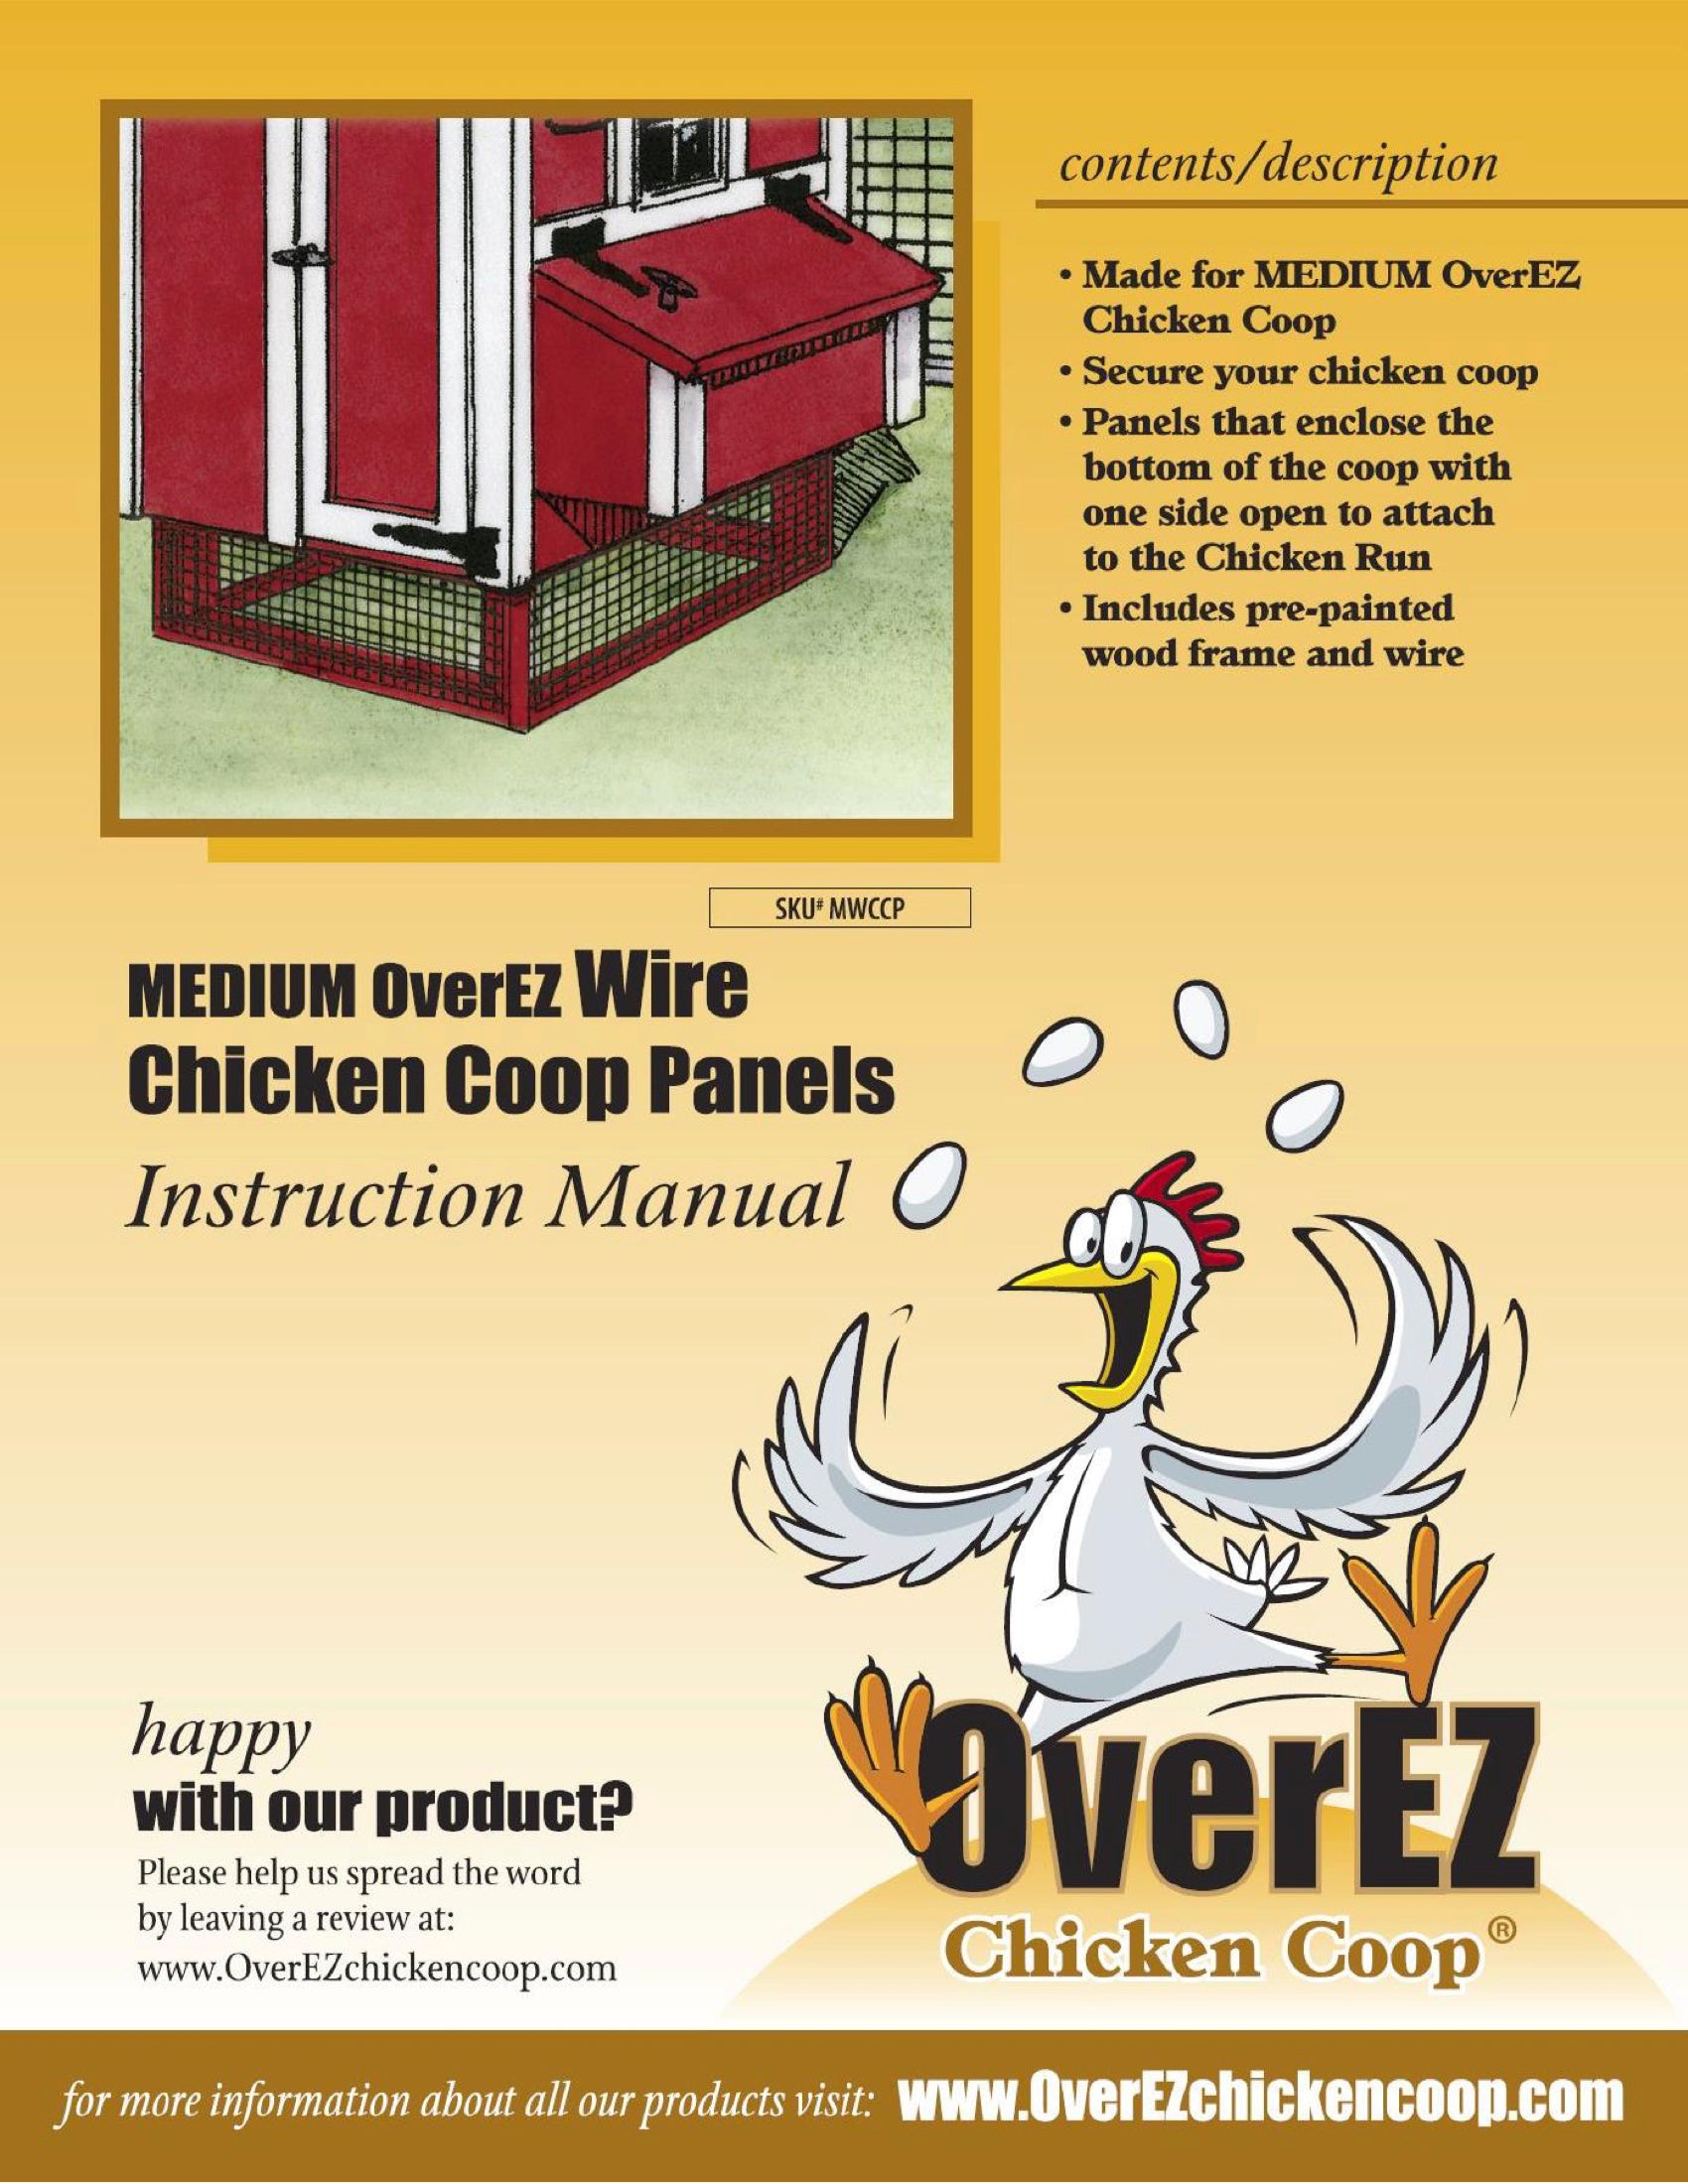 Medium OverEZ Wire Chicken Coop Panels Instructions